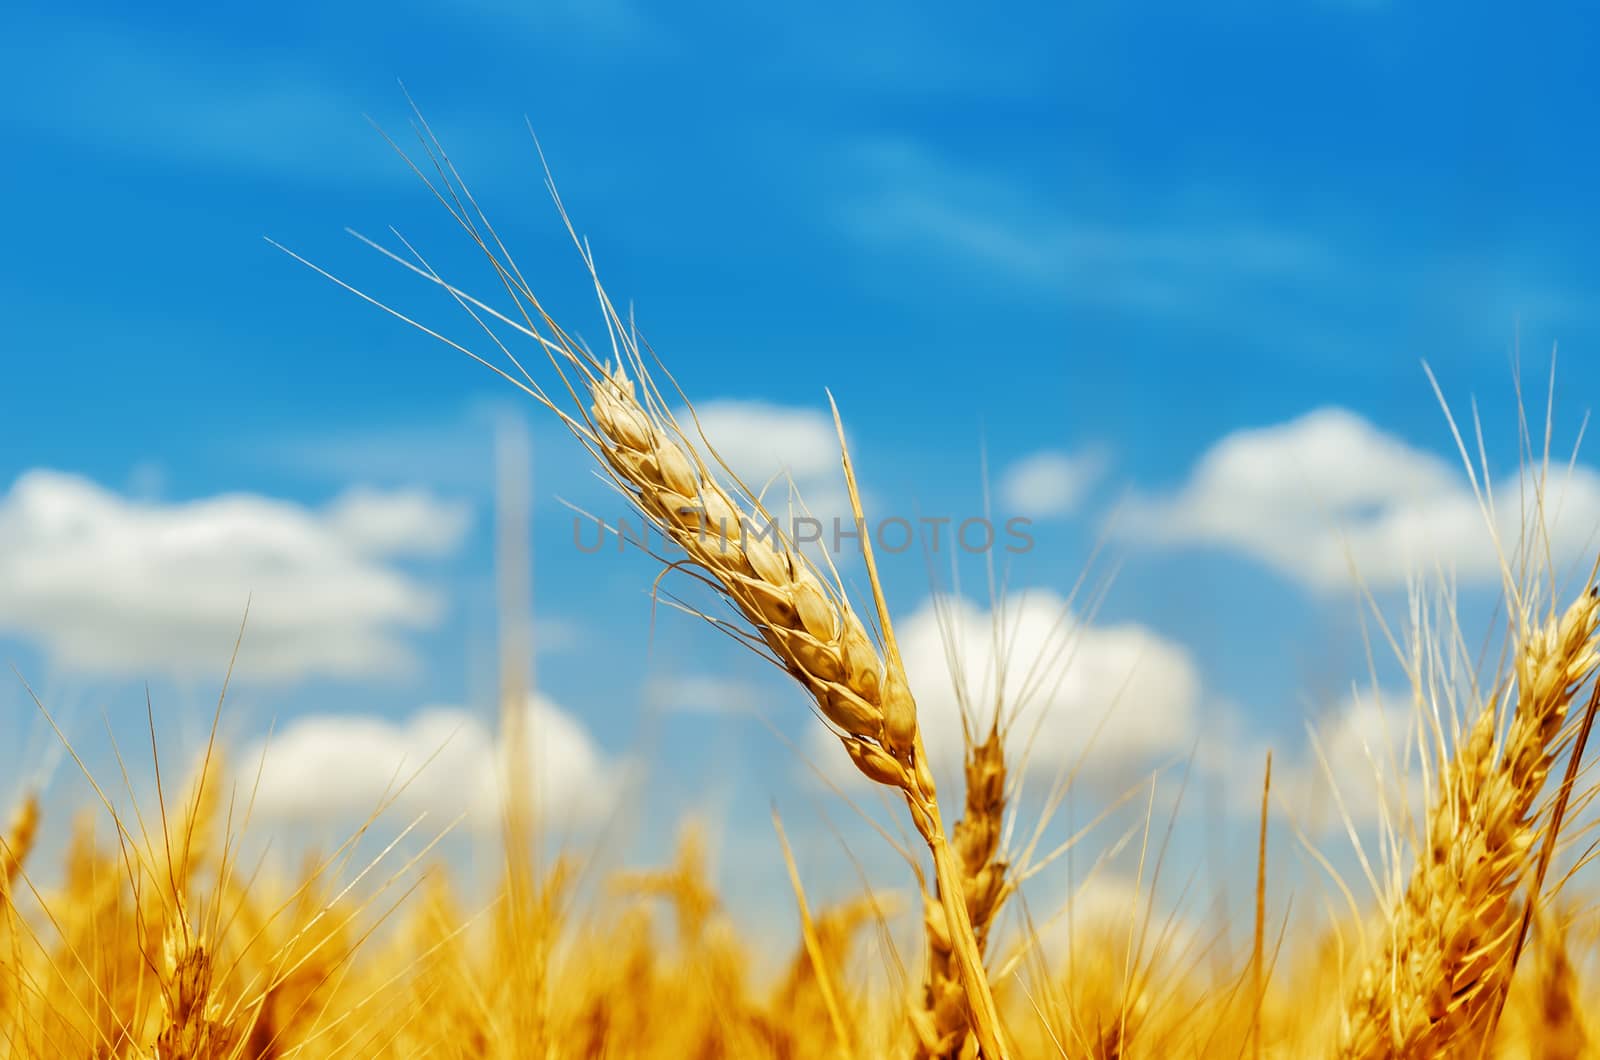 golden barley on field under blue sky